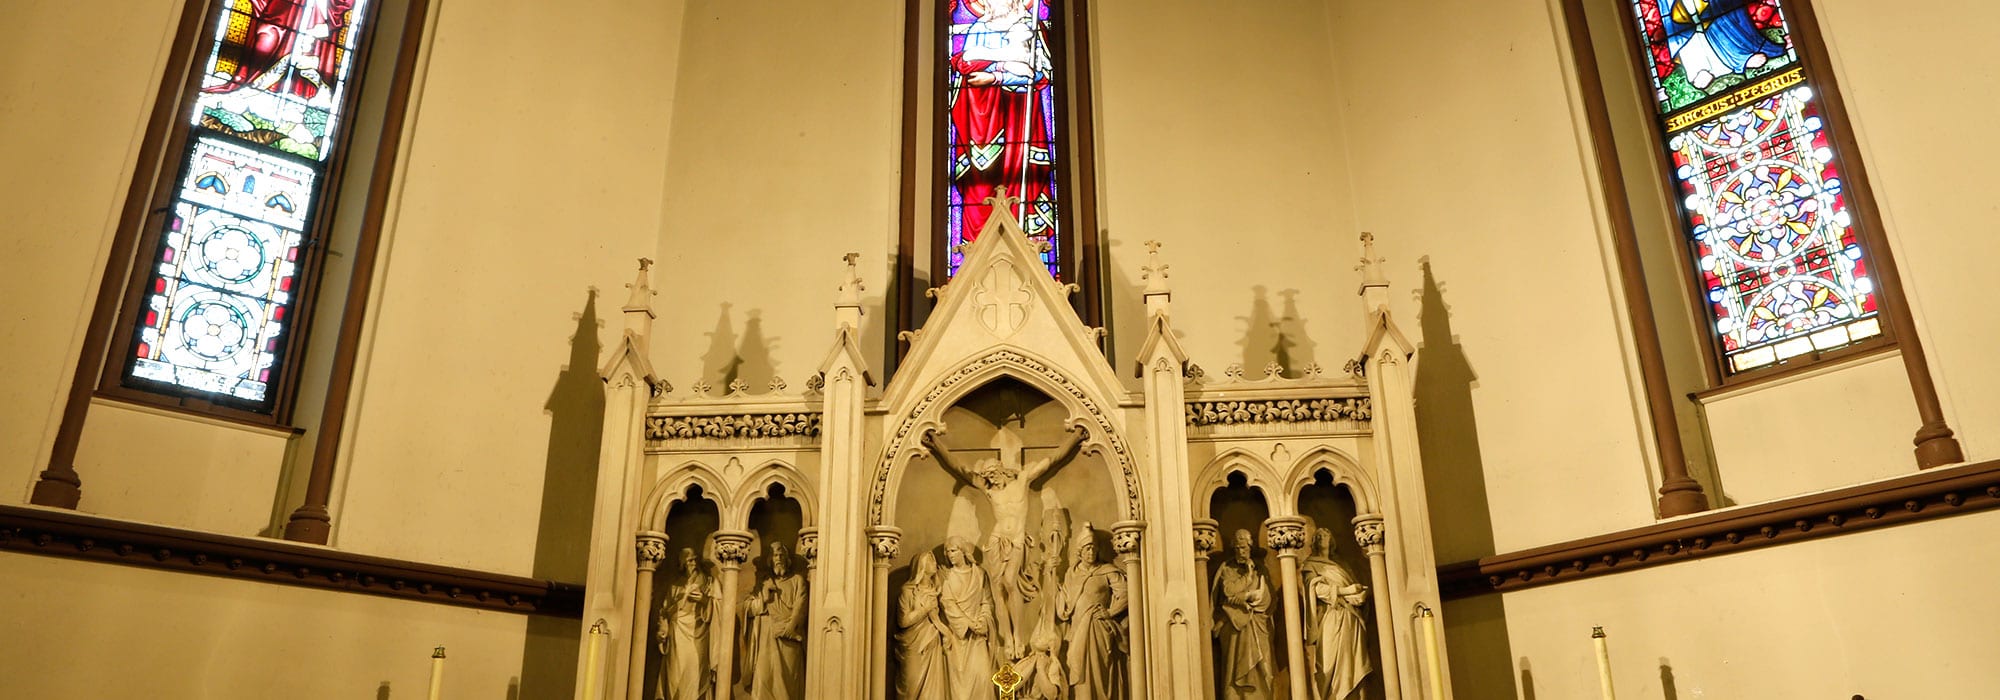 Altar of St. Thomas